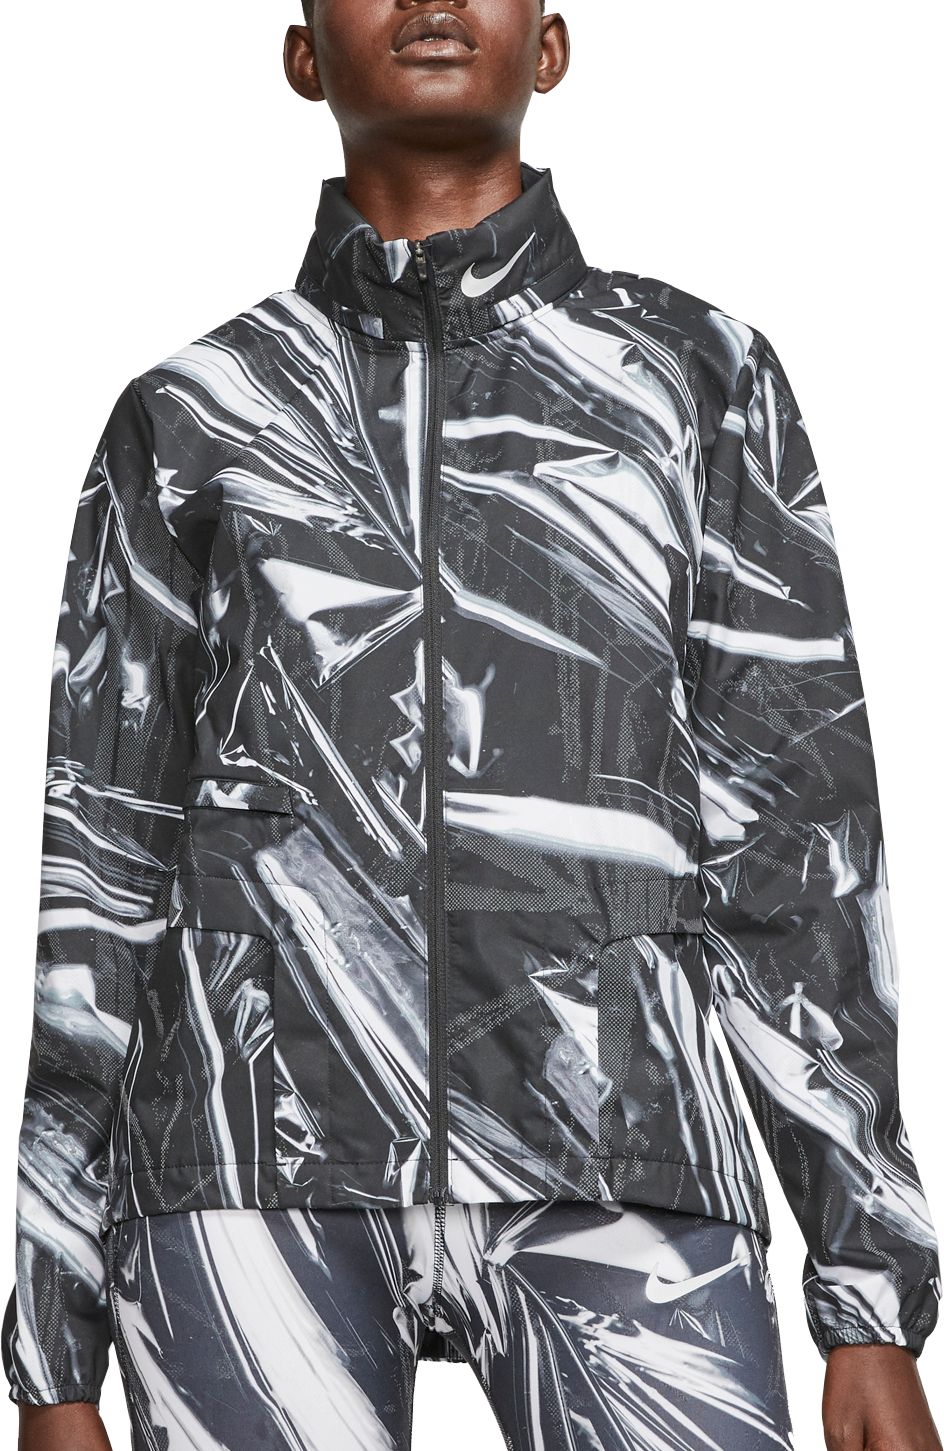 nike women's shield flash reflective running jacket